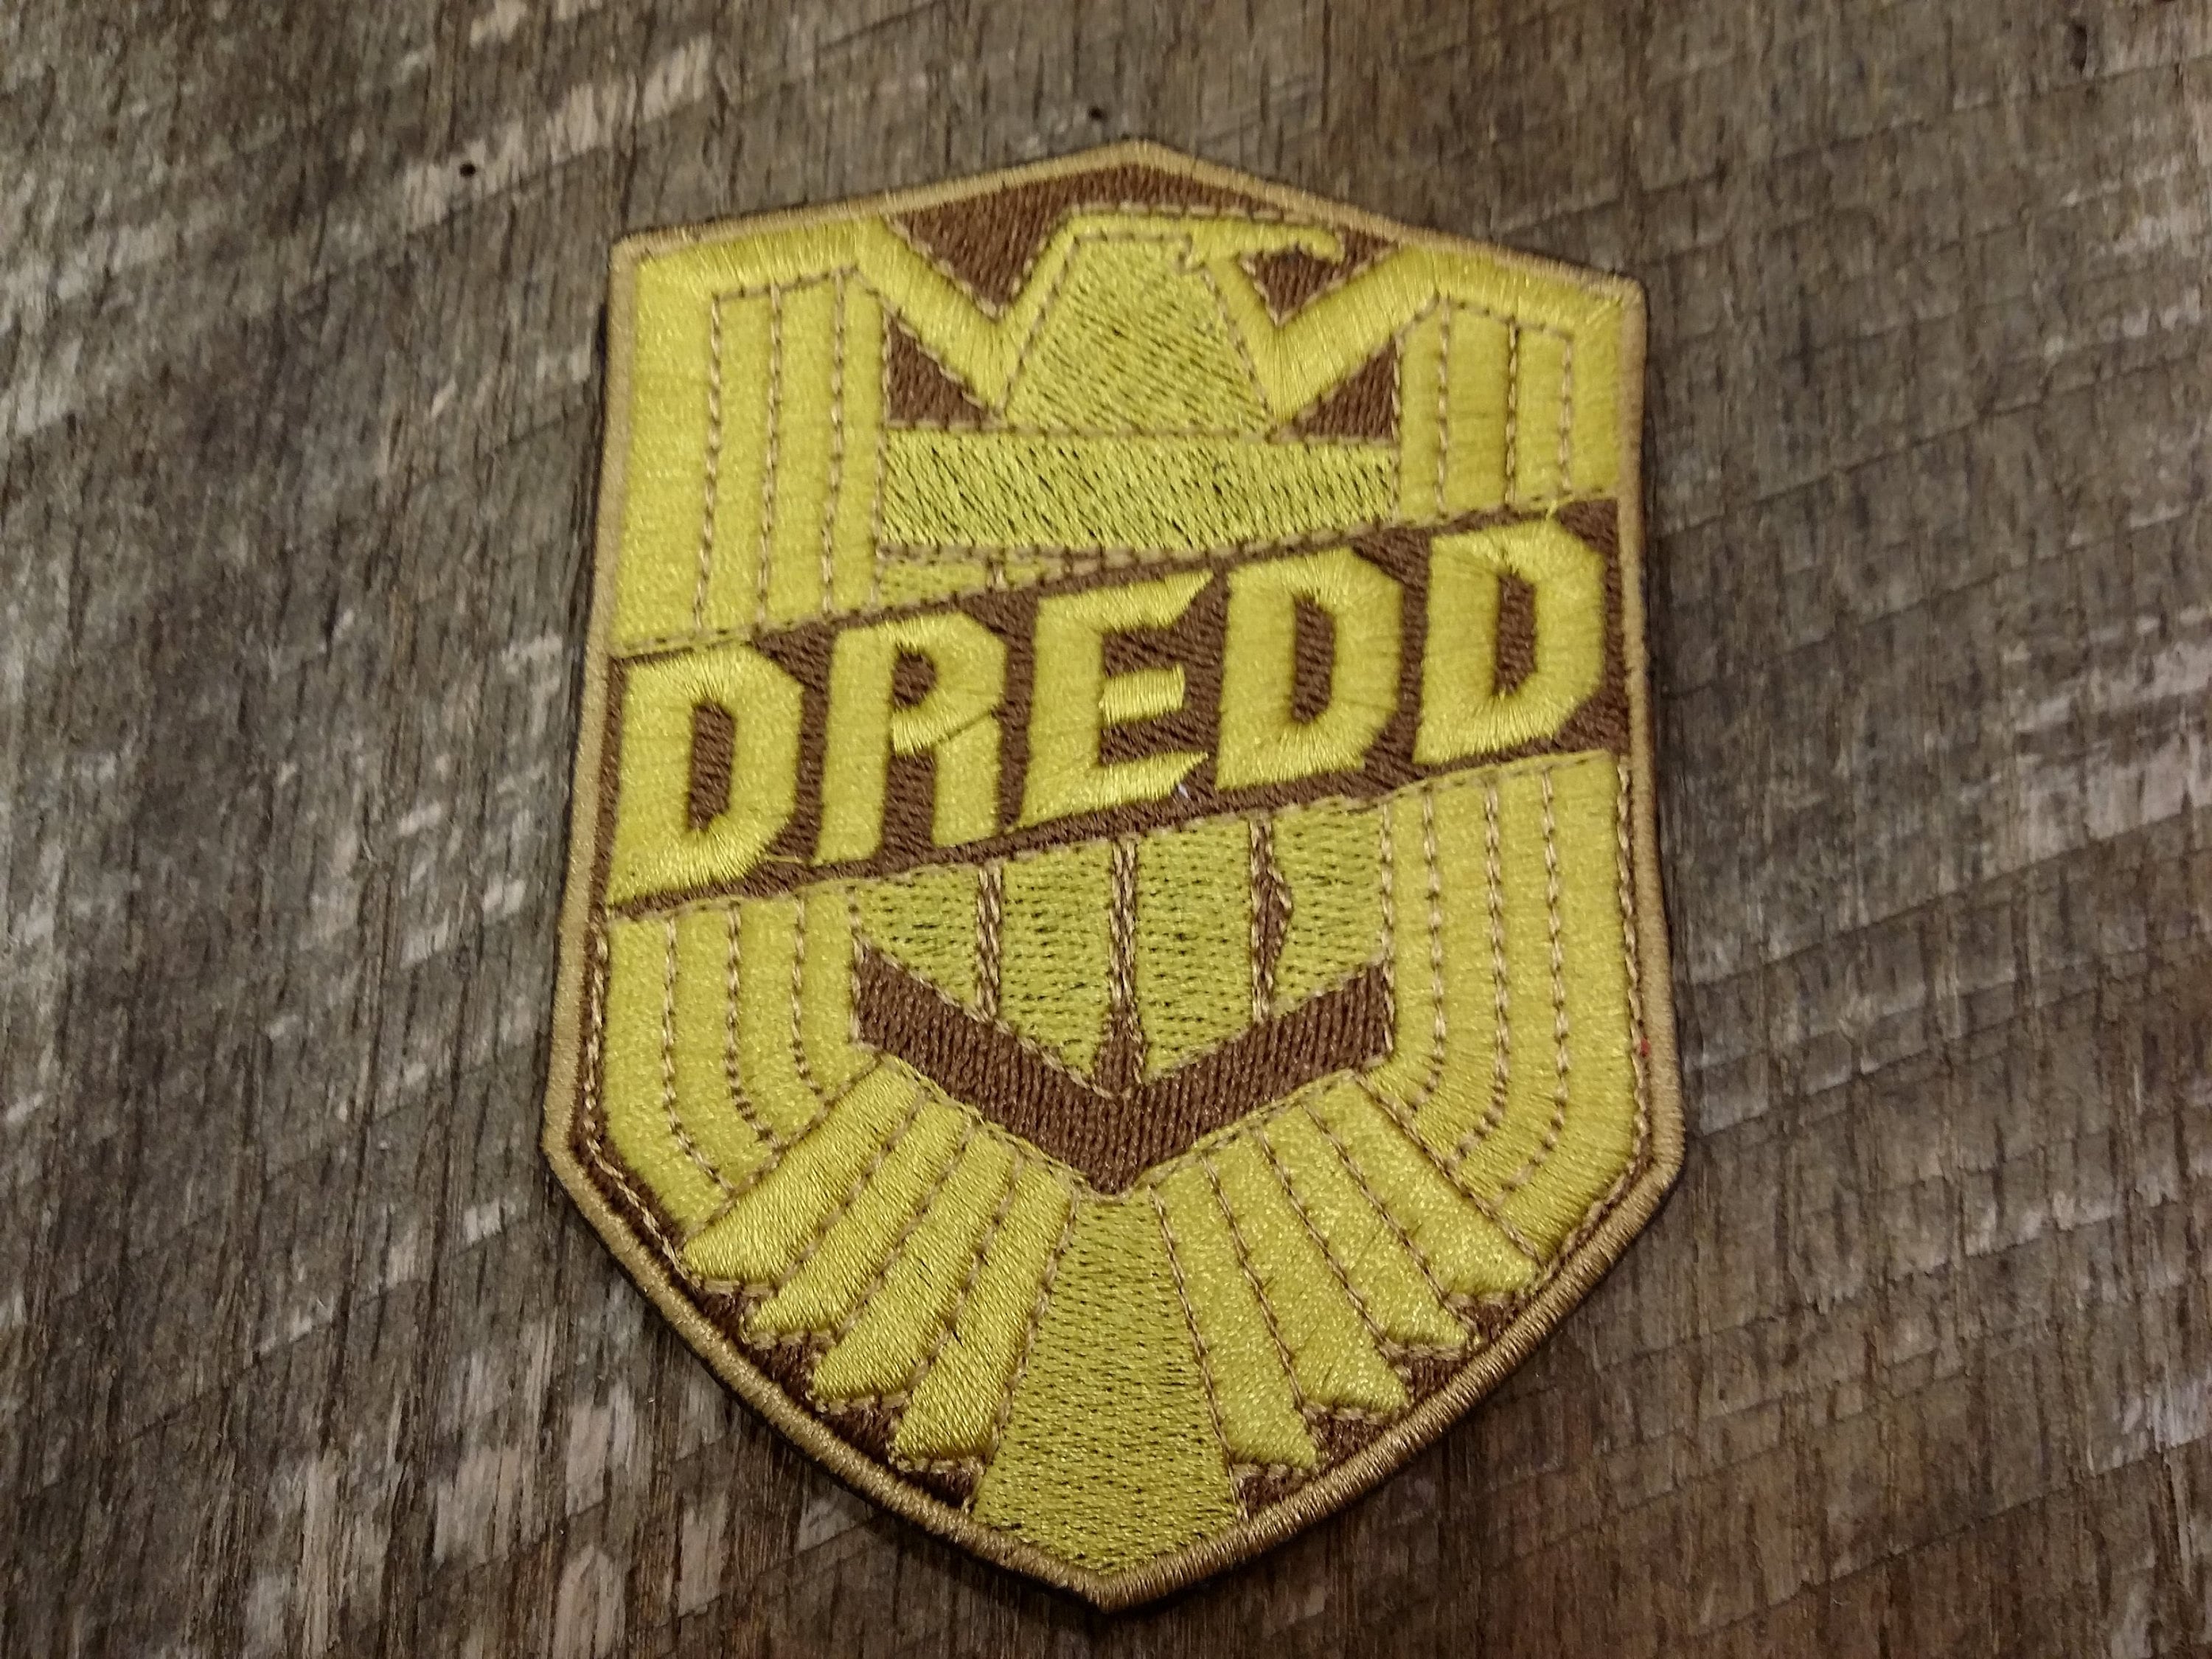 Onekool Judge Dredd Classic Movie Logo Lot Of 2 Iron On Patches 